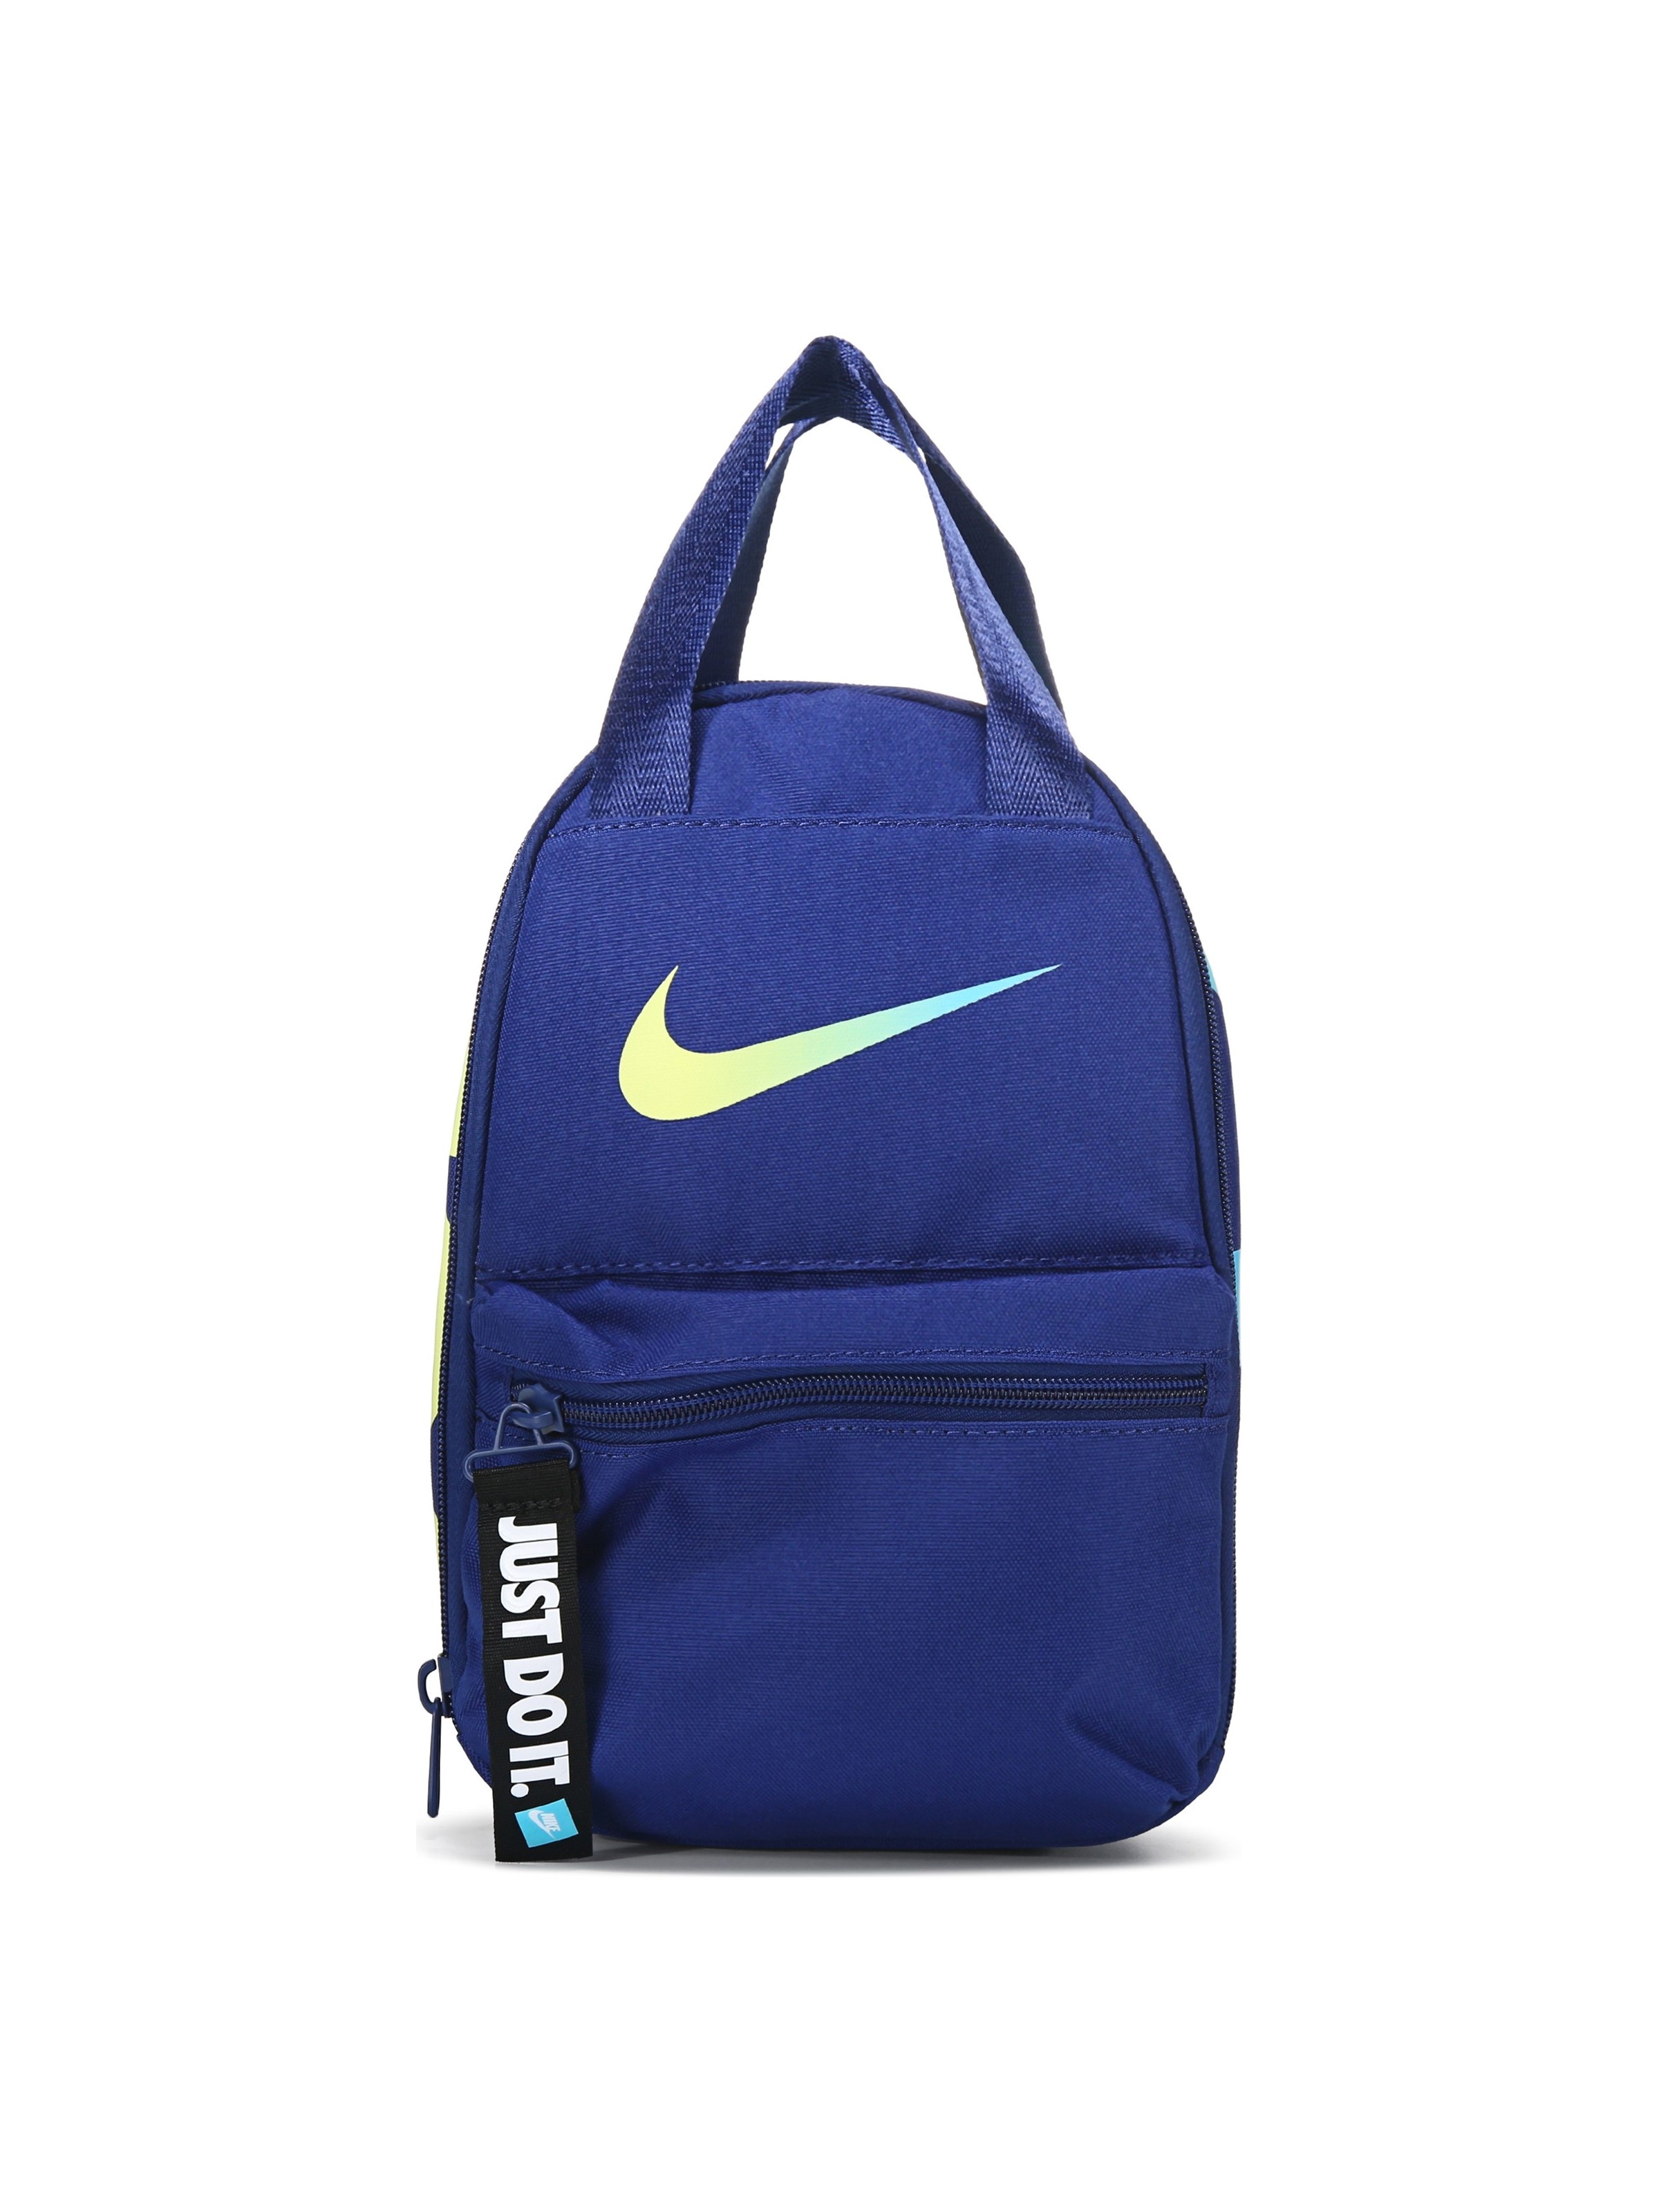 Nike Lunch Bag